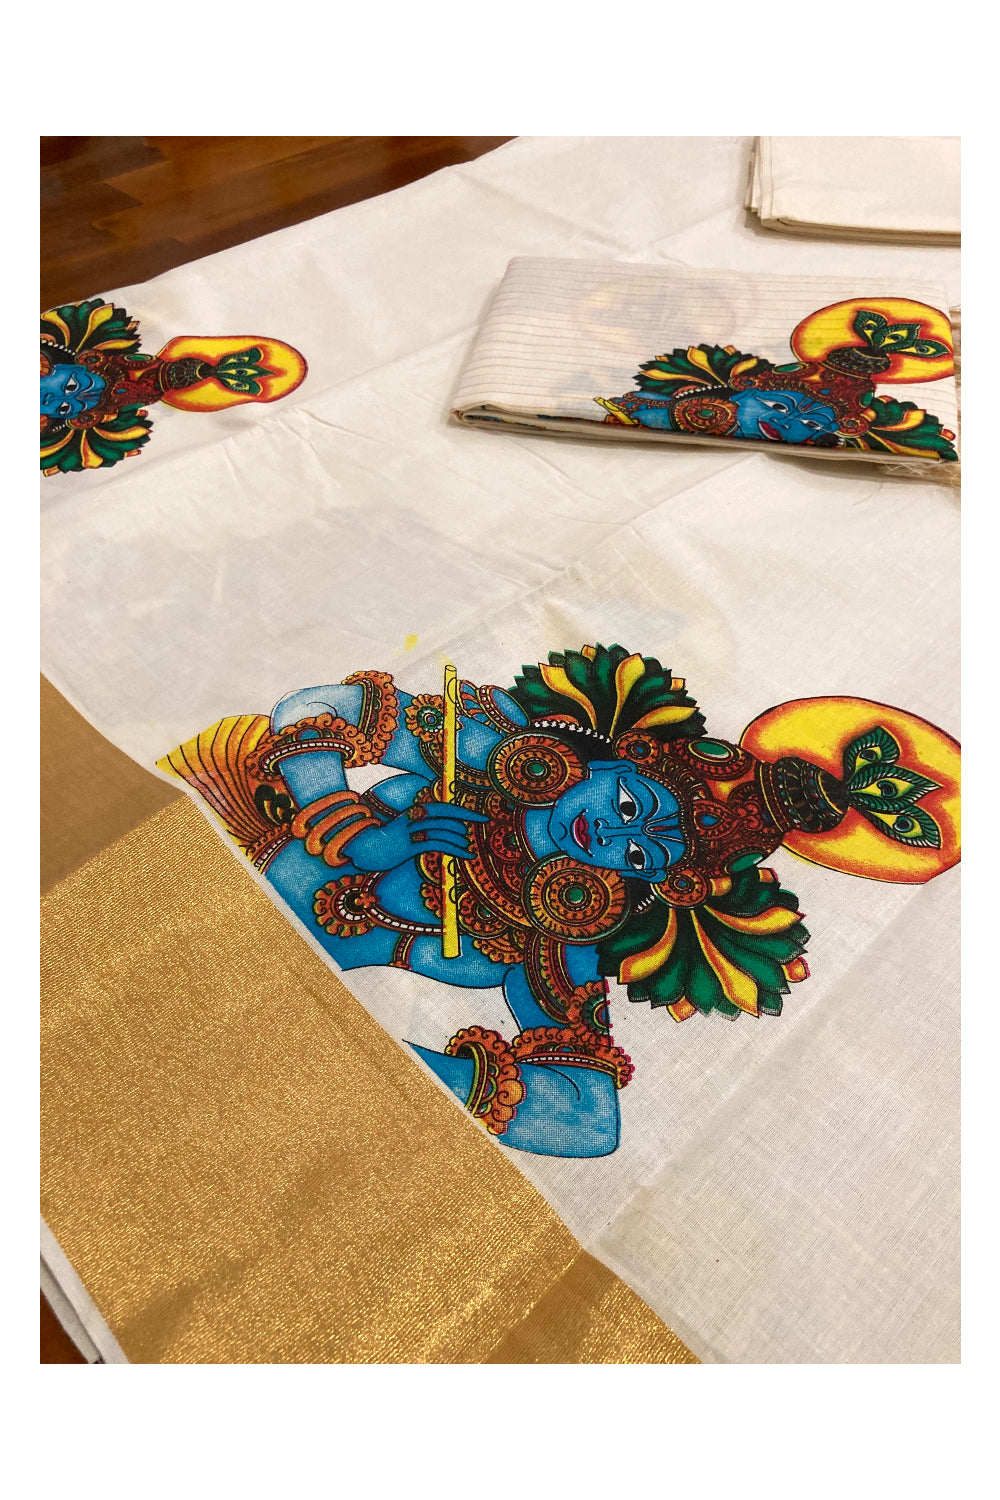 Kerala Cotton Kasavu Churidar Salwar Material with Mural Printed Krishna Design (include Lines Printed Shawl / Dupatta)